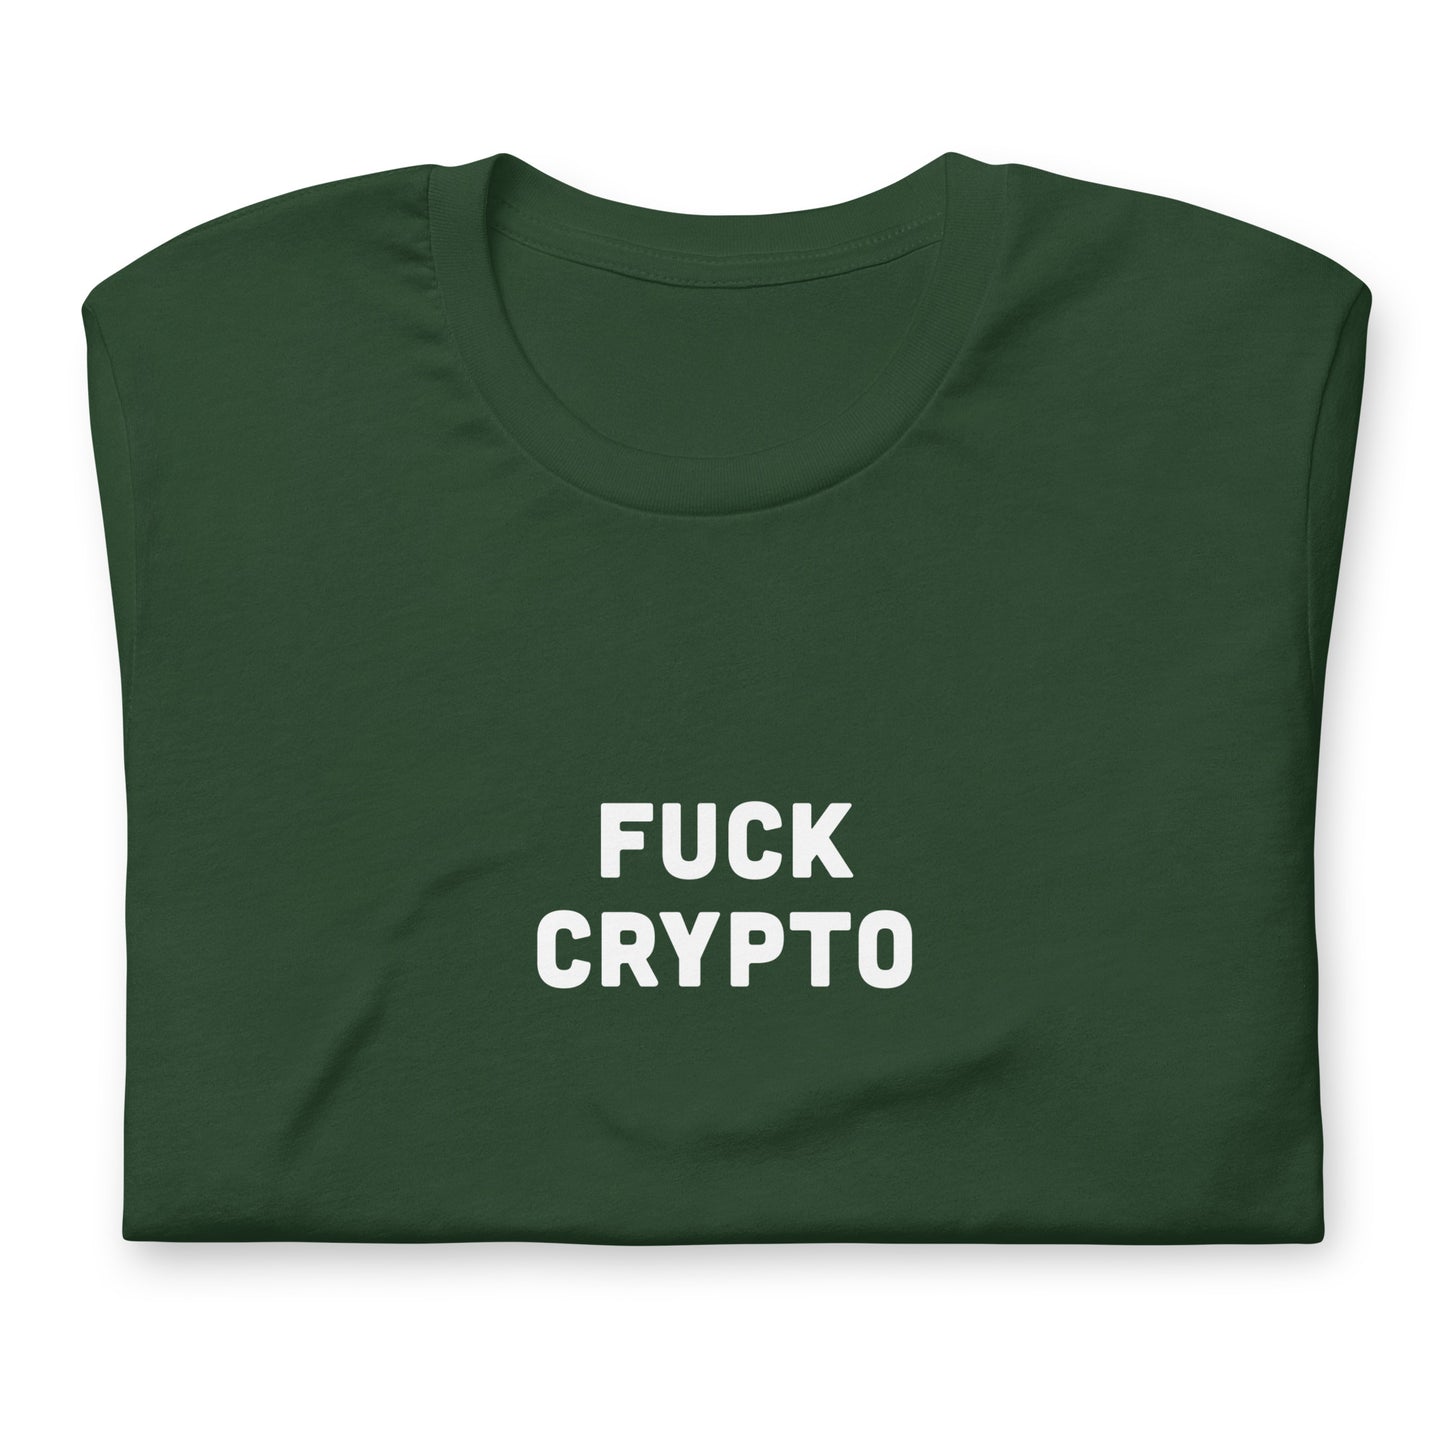 Fuck Crypto T-Shirt Size XL Color Black